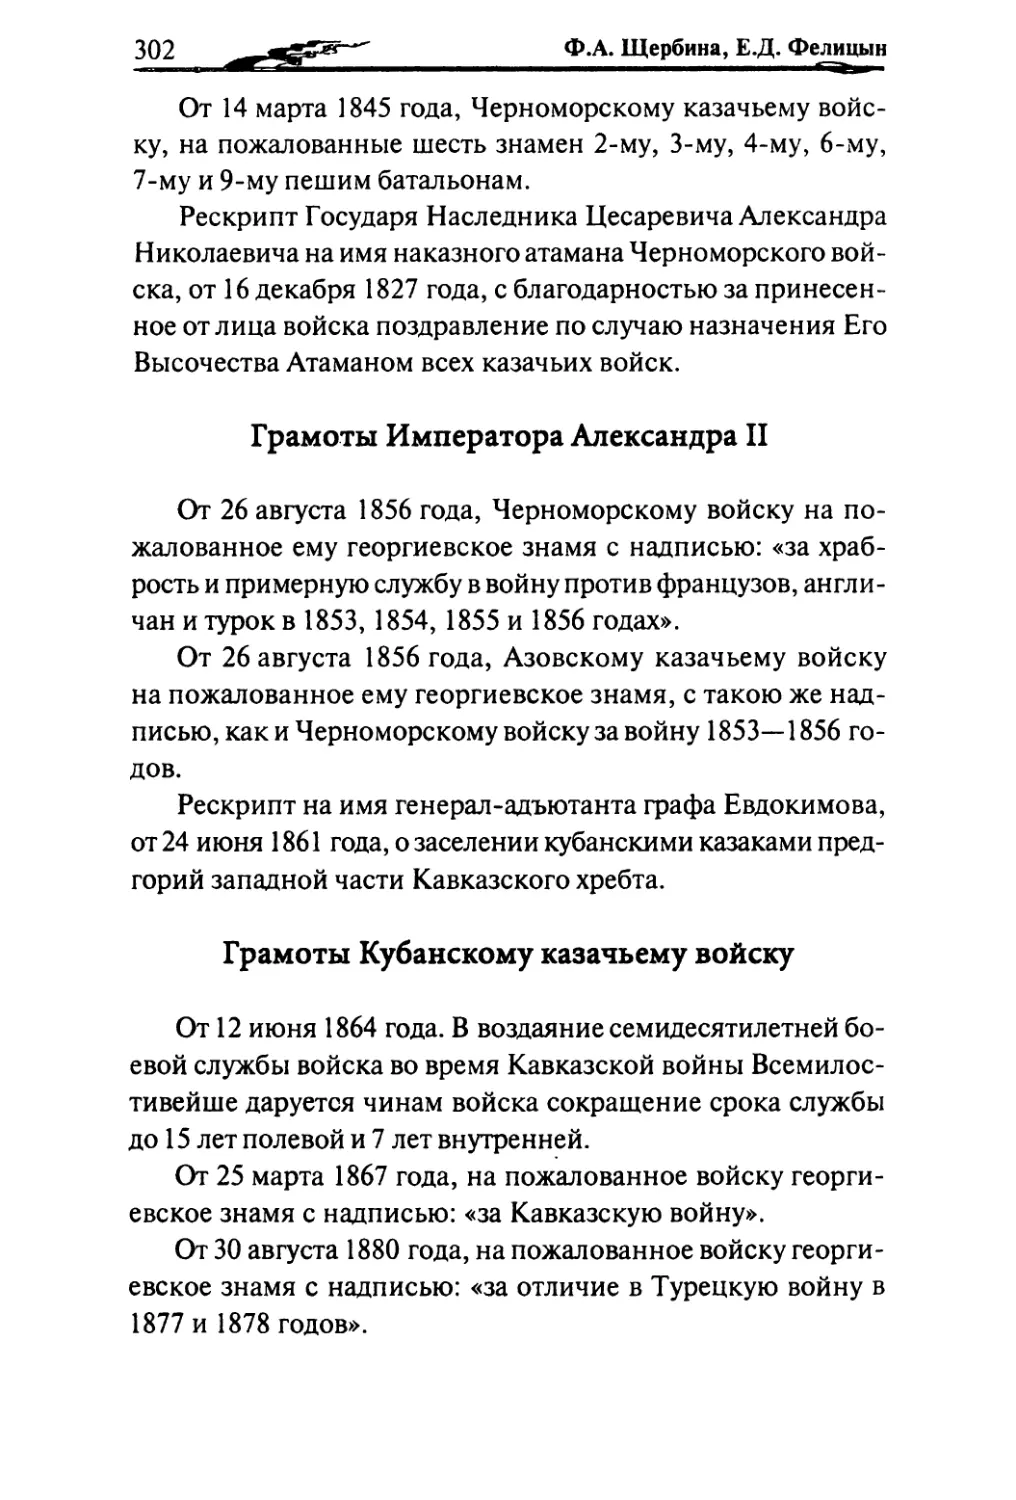 Грамоты Императора Александра II